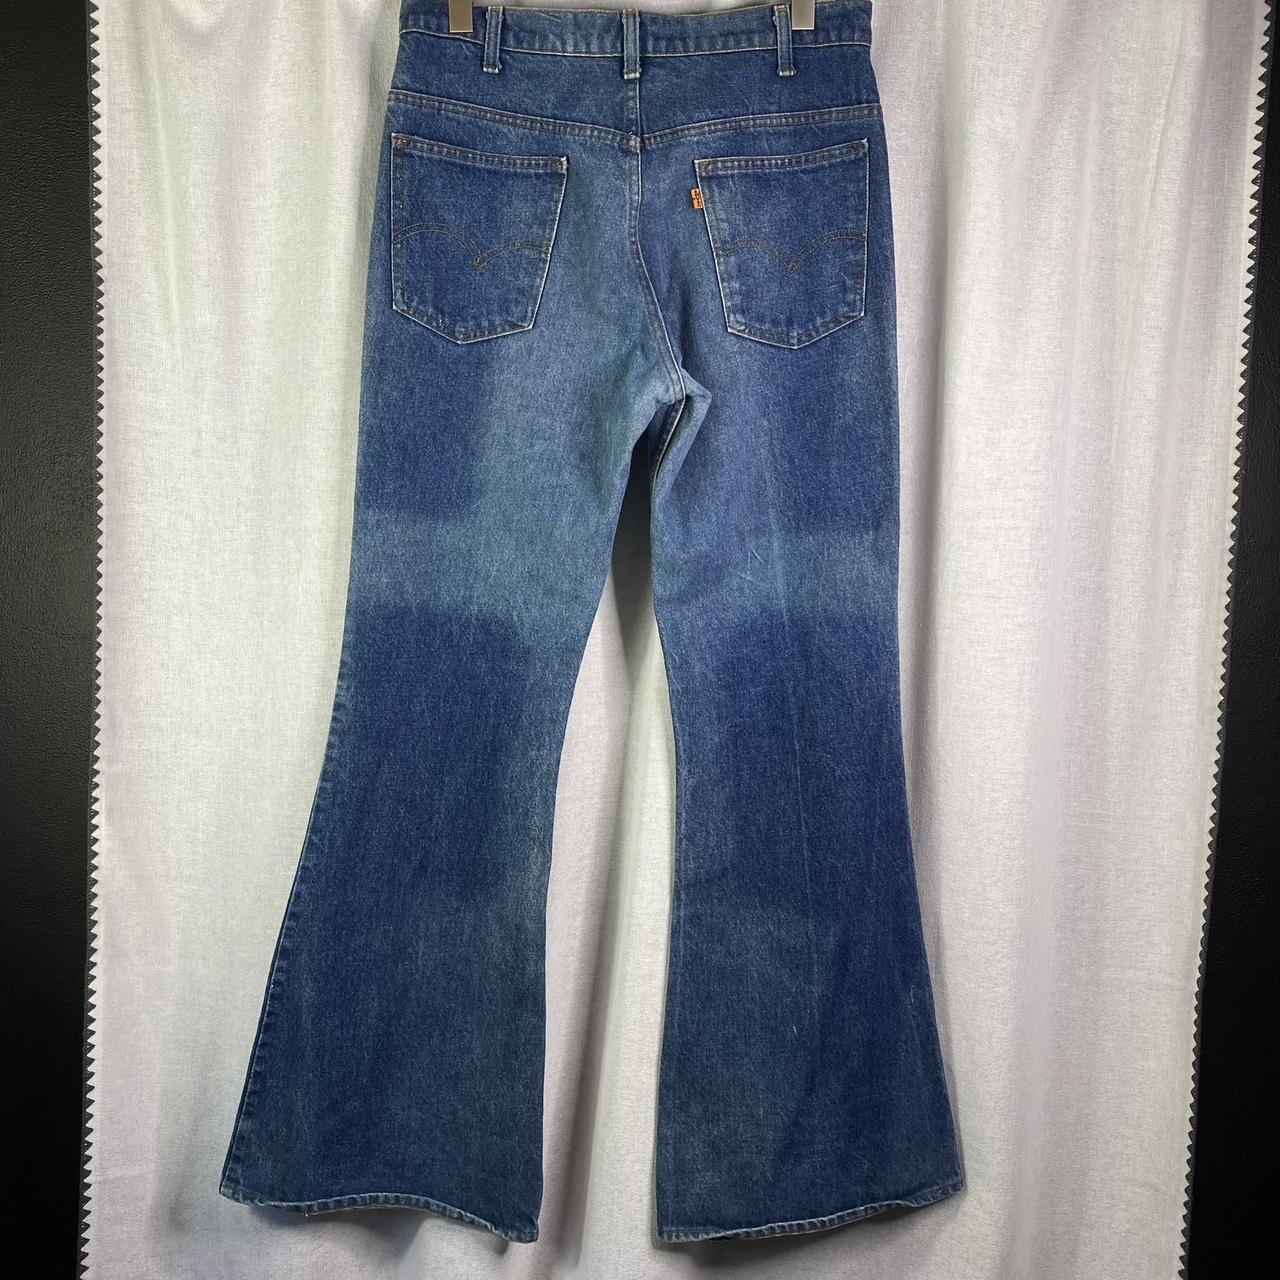 Vintage Levis Jeans Orange Tab 34x34 684 Super... - Depop